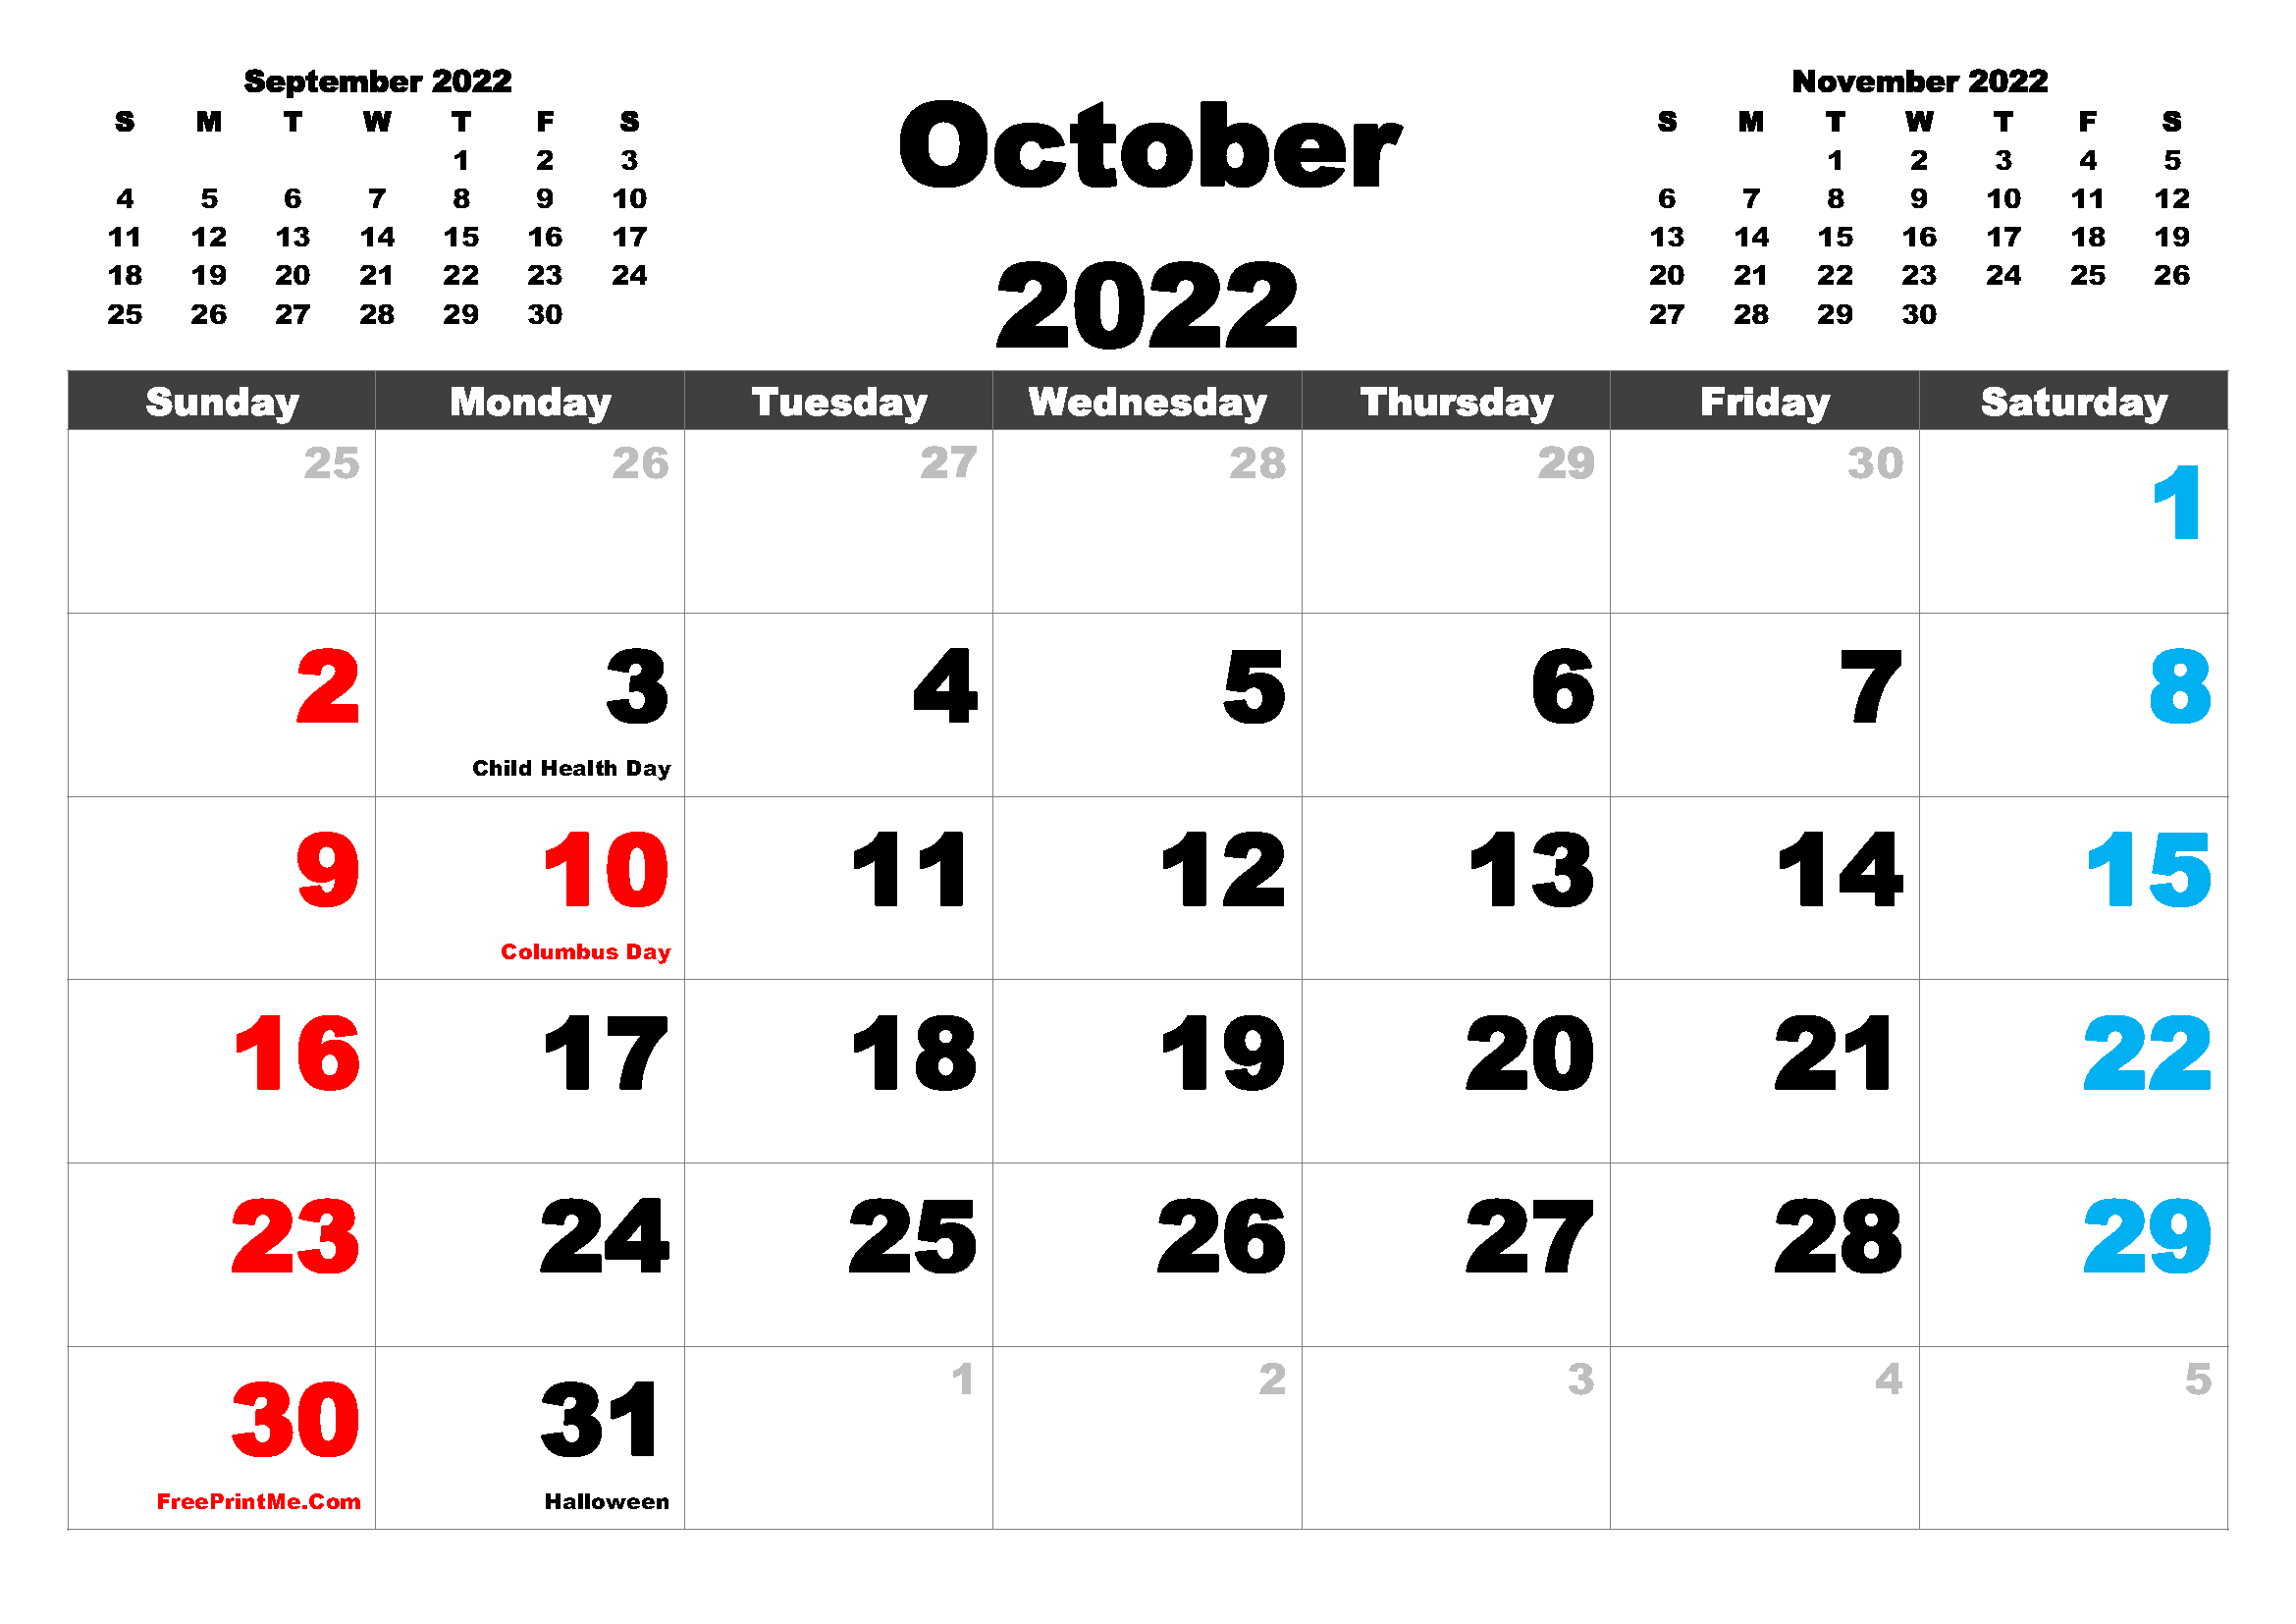 October 2022 Calendar Template Free Printable October 2022 Calendar Pdf, Png Image